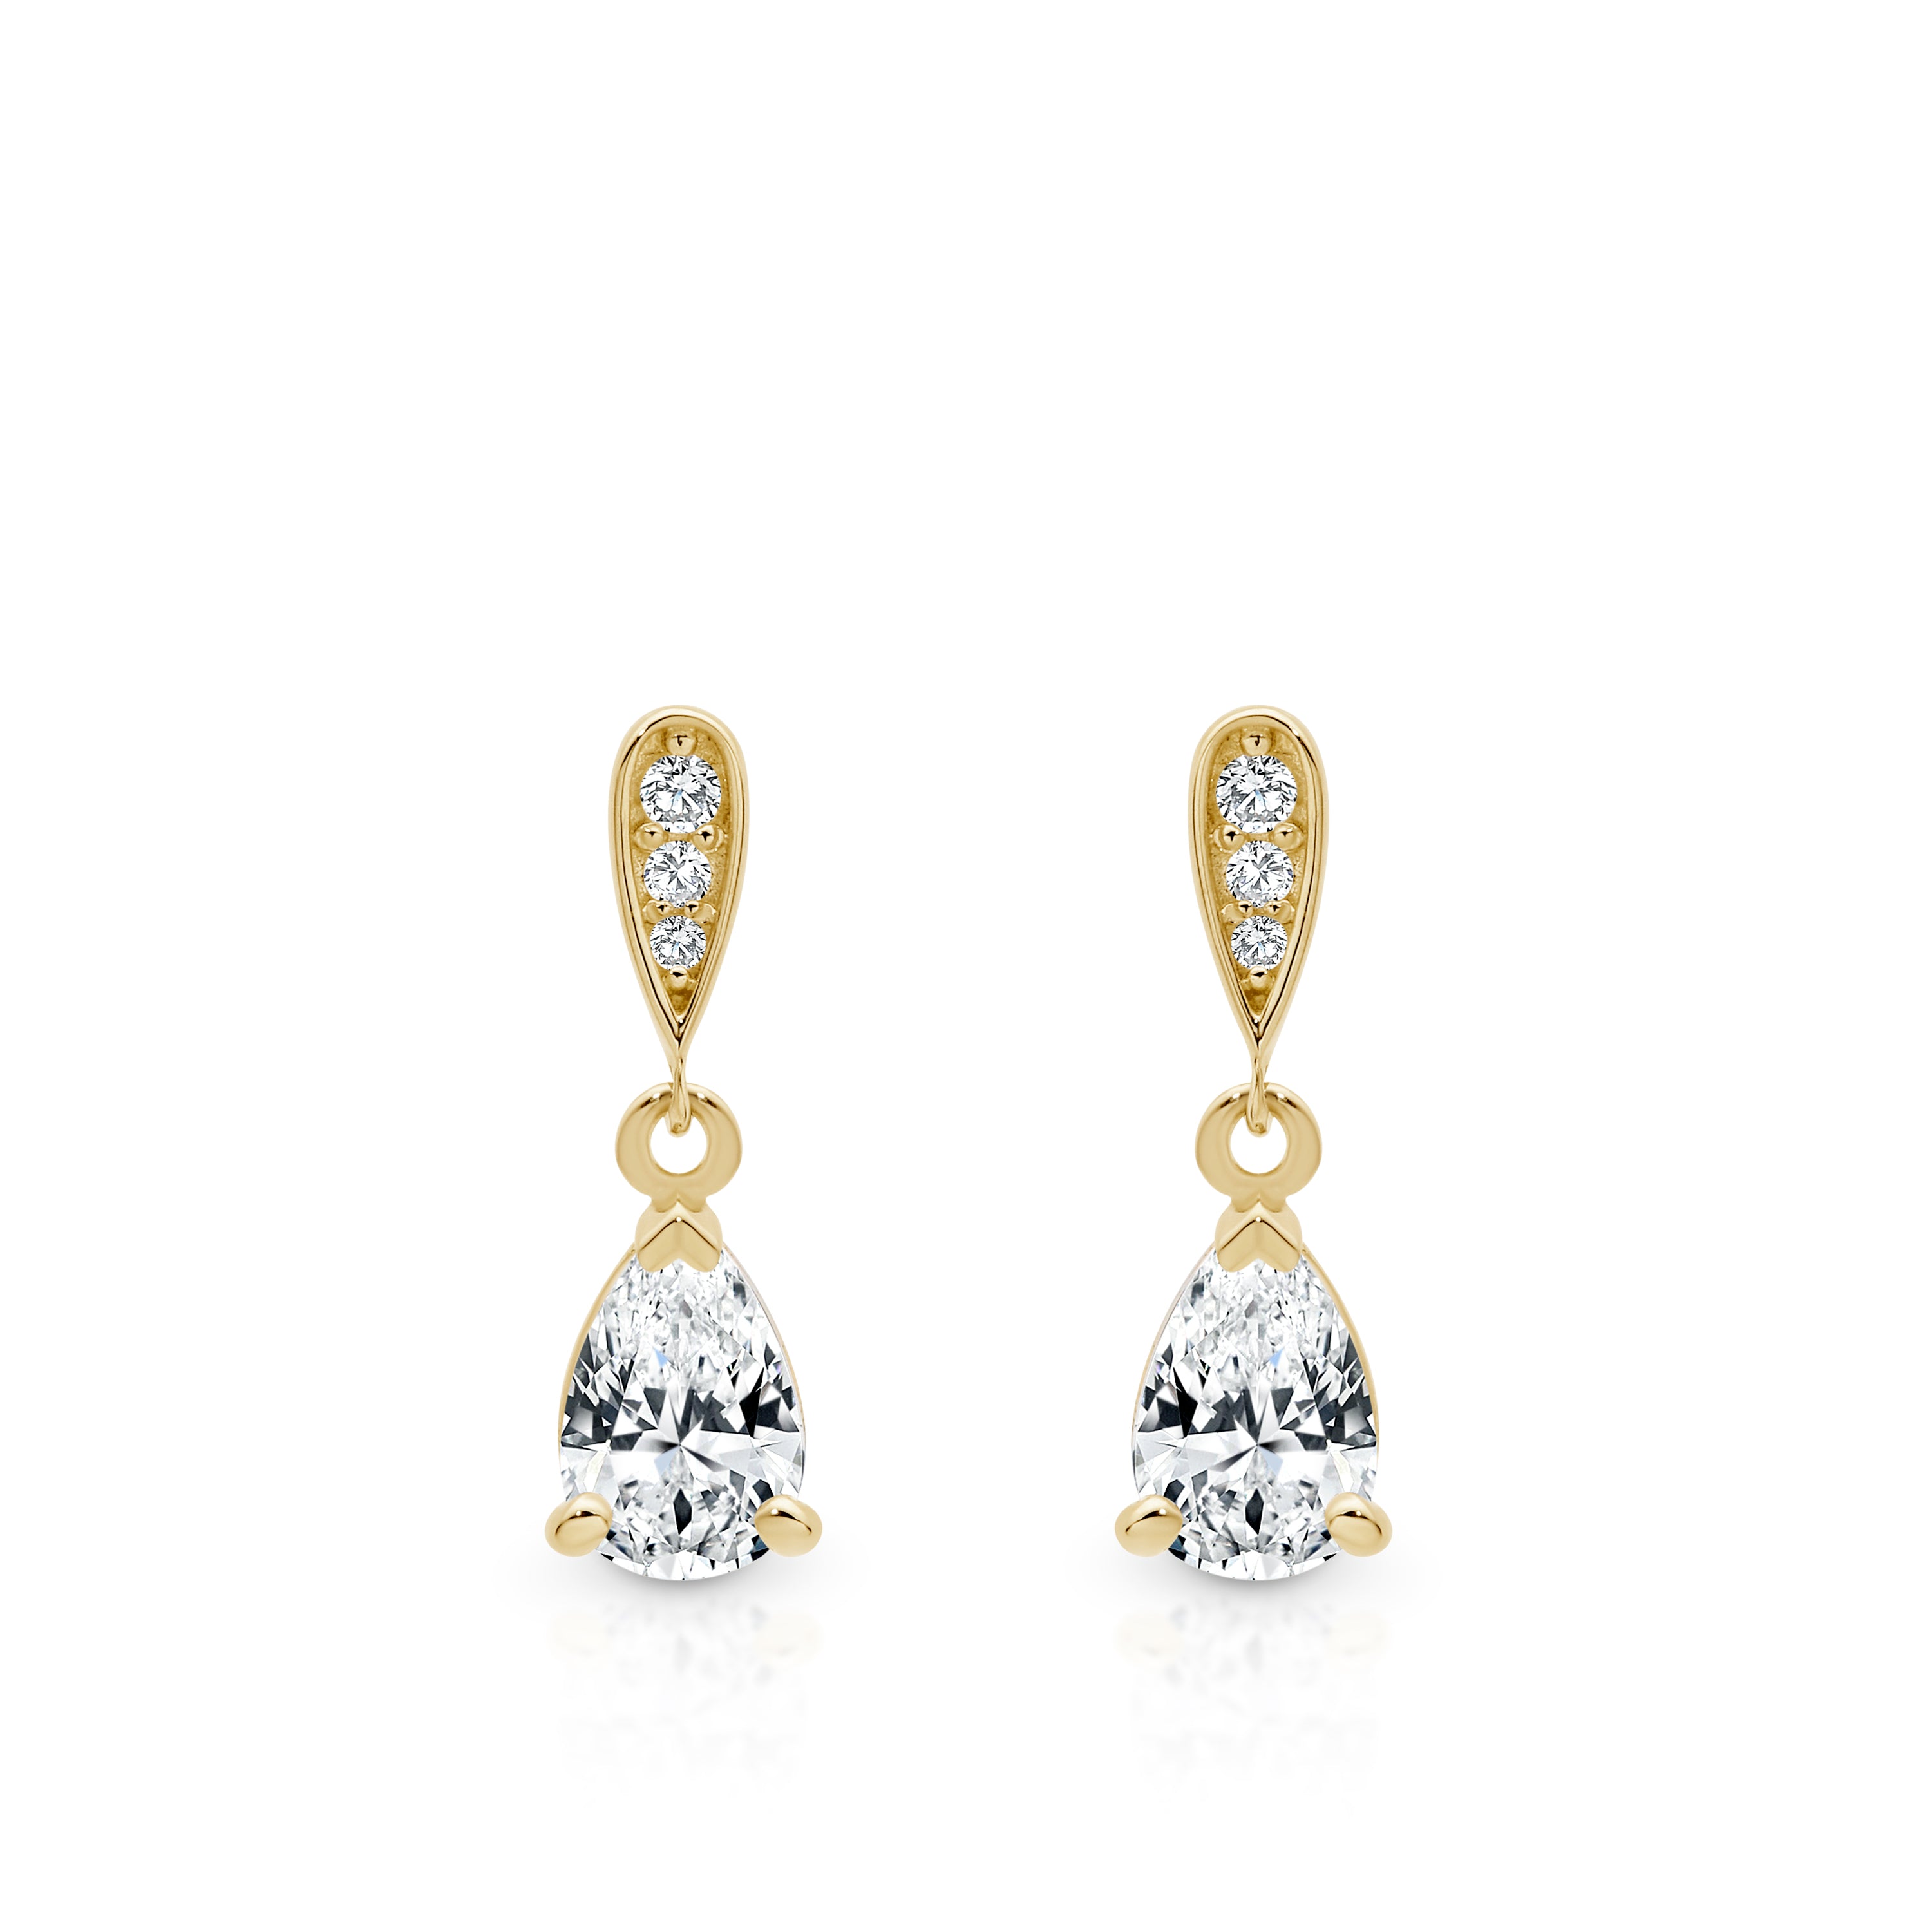 9ct gold stone set drop earrings